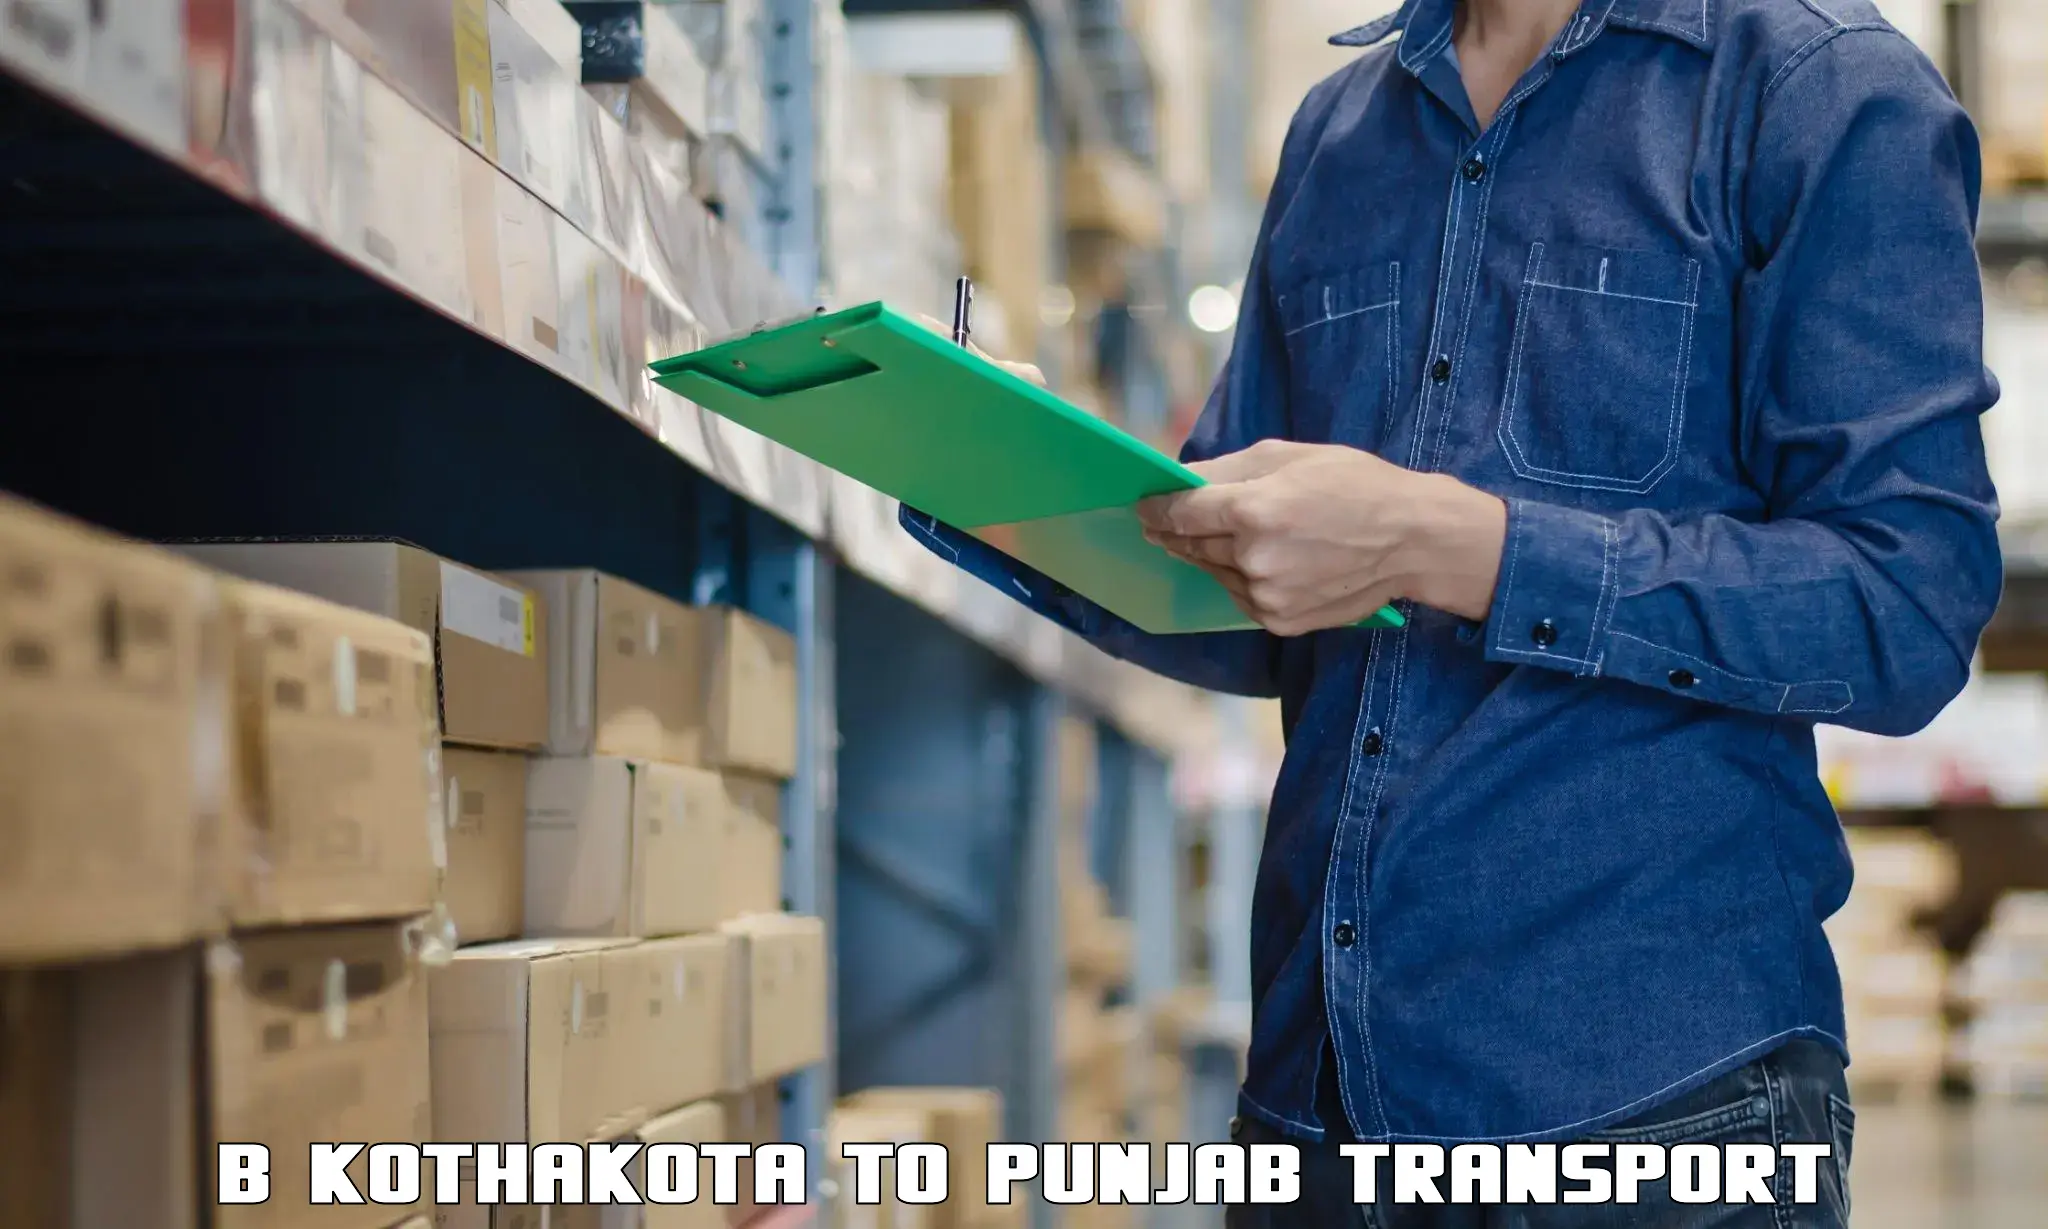 Lorry transport service B Kothakota to Ropar